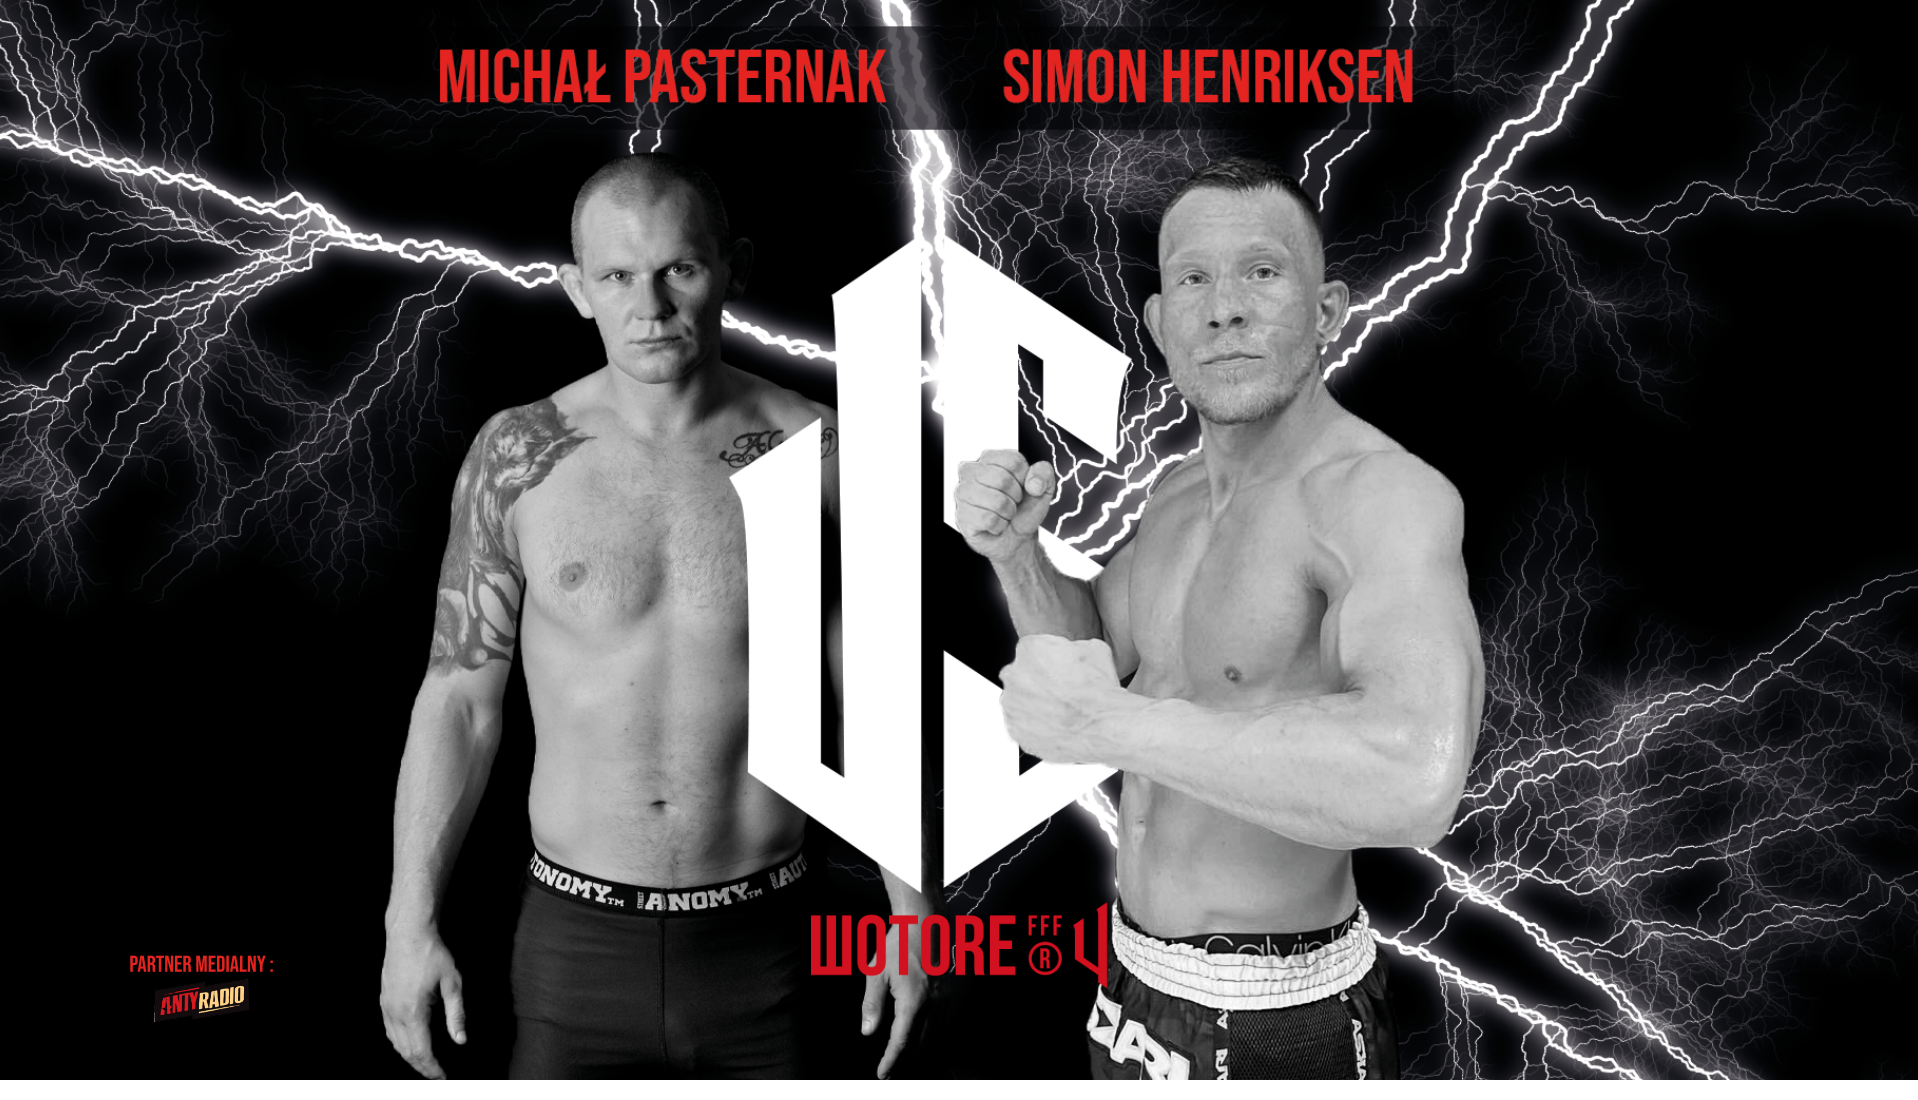 Main event WOTORE 4! Michał „Wampir” Pasternak vs Simon „The Savage” Henriksen